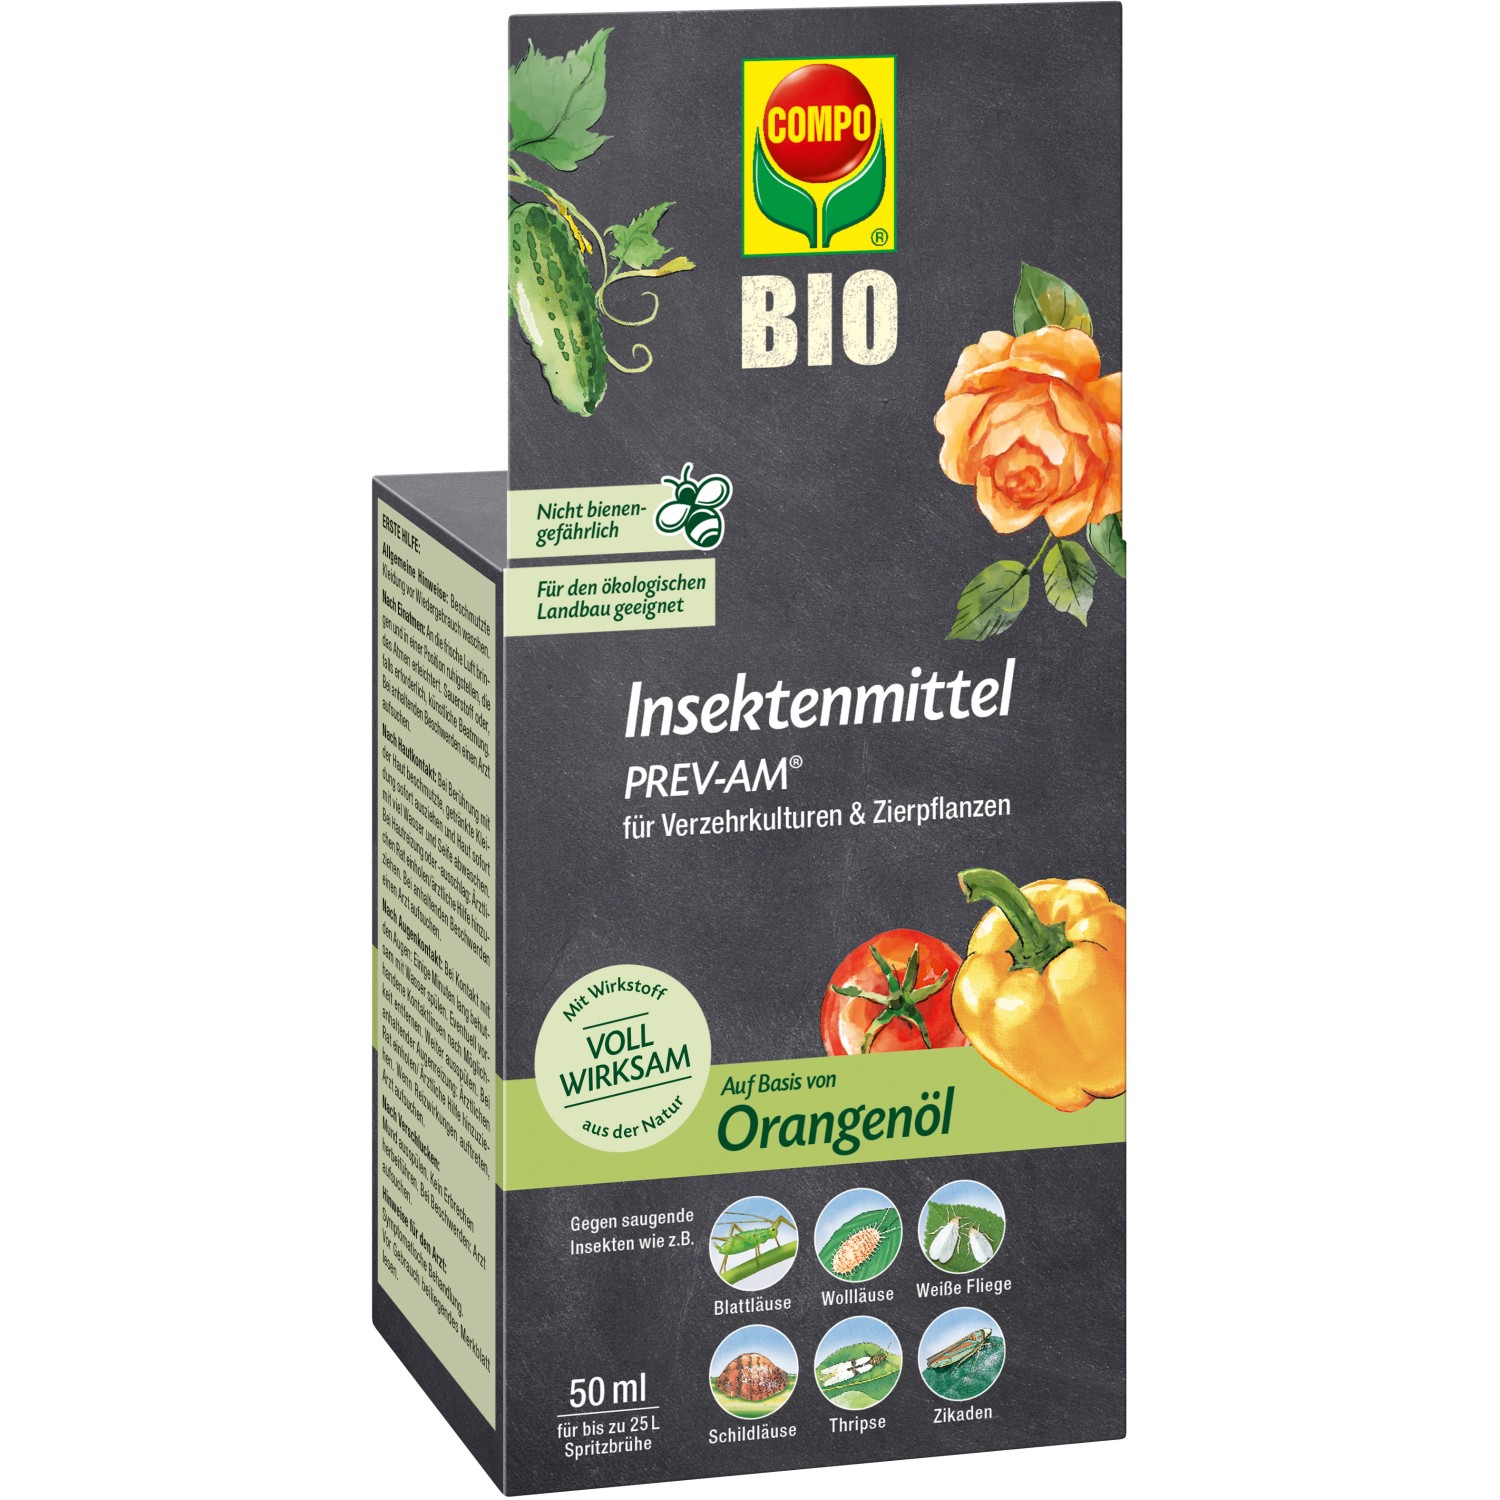 Compo Insektenmittel Prev-AM 50 ml